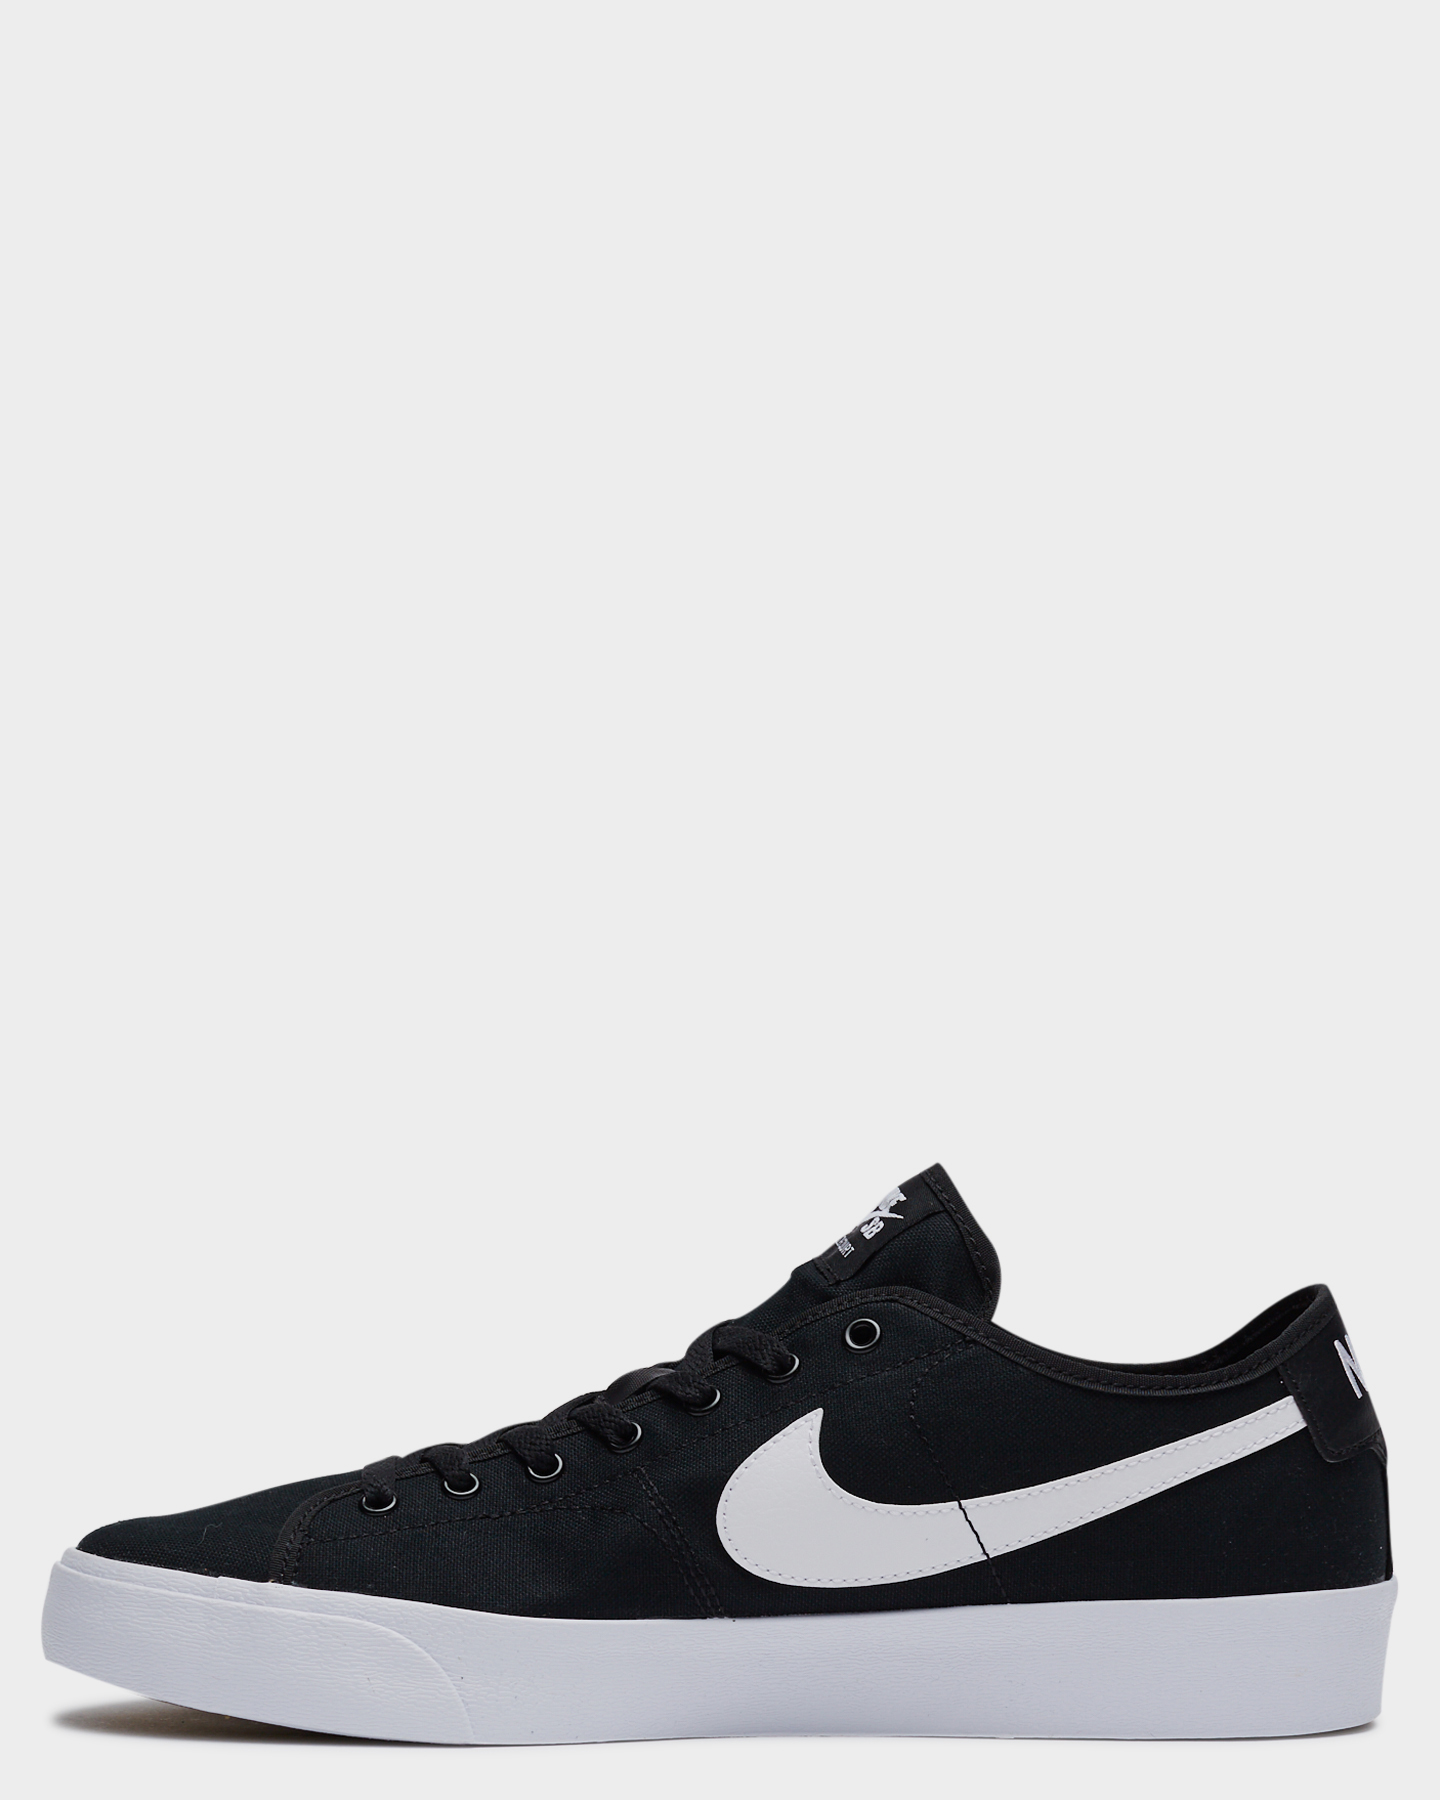 Nike Sb Blazer Court Shoe - Black White | SurfStitch